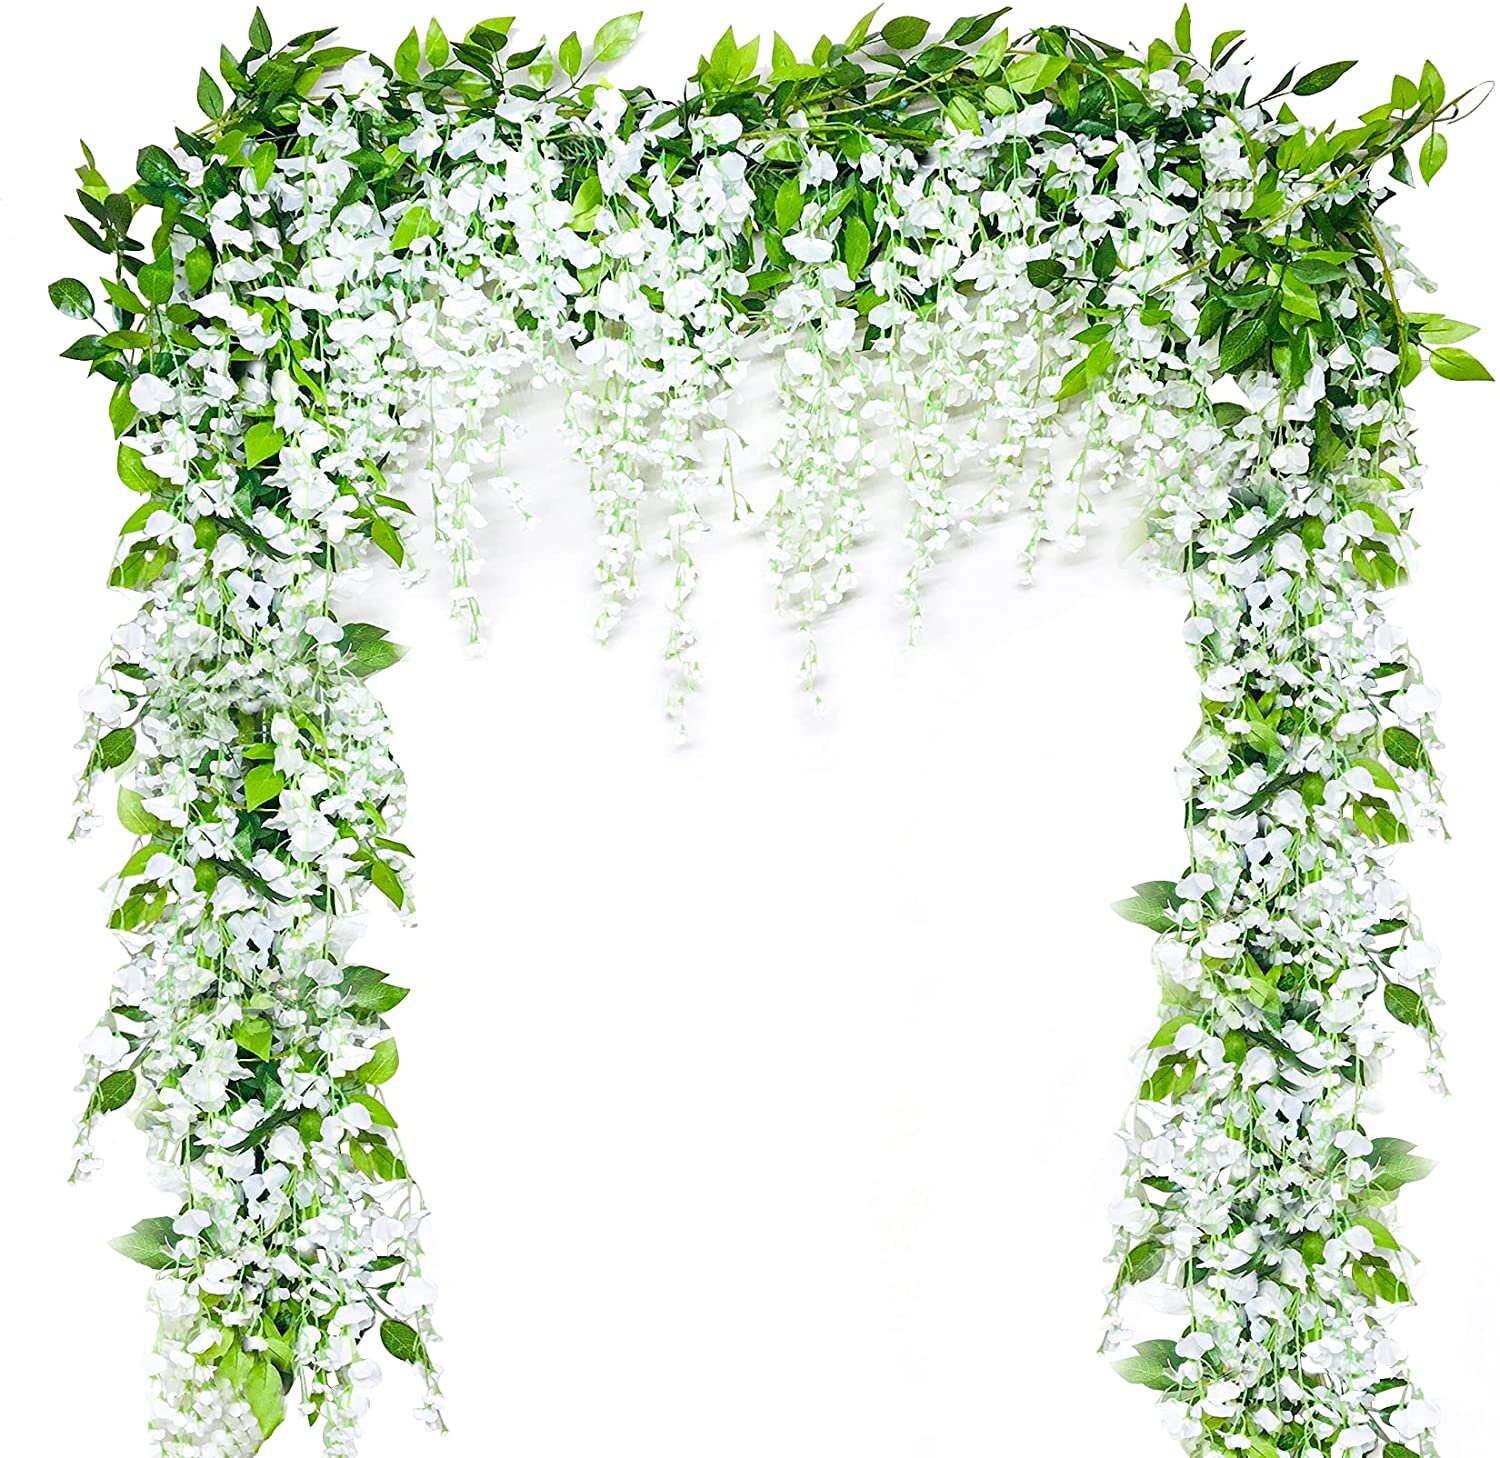 White Wisteria Bush Vines Silk Flowers Wedding Arch Hanging Backdrop Centerpiece 